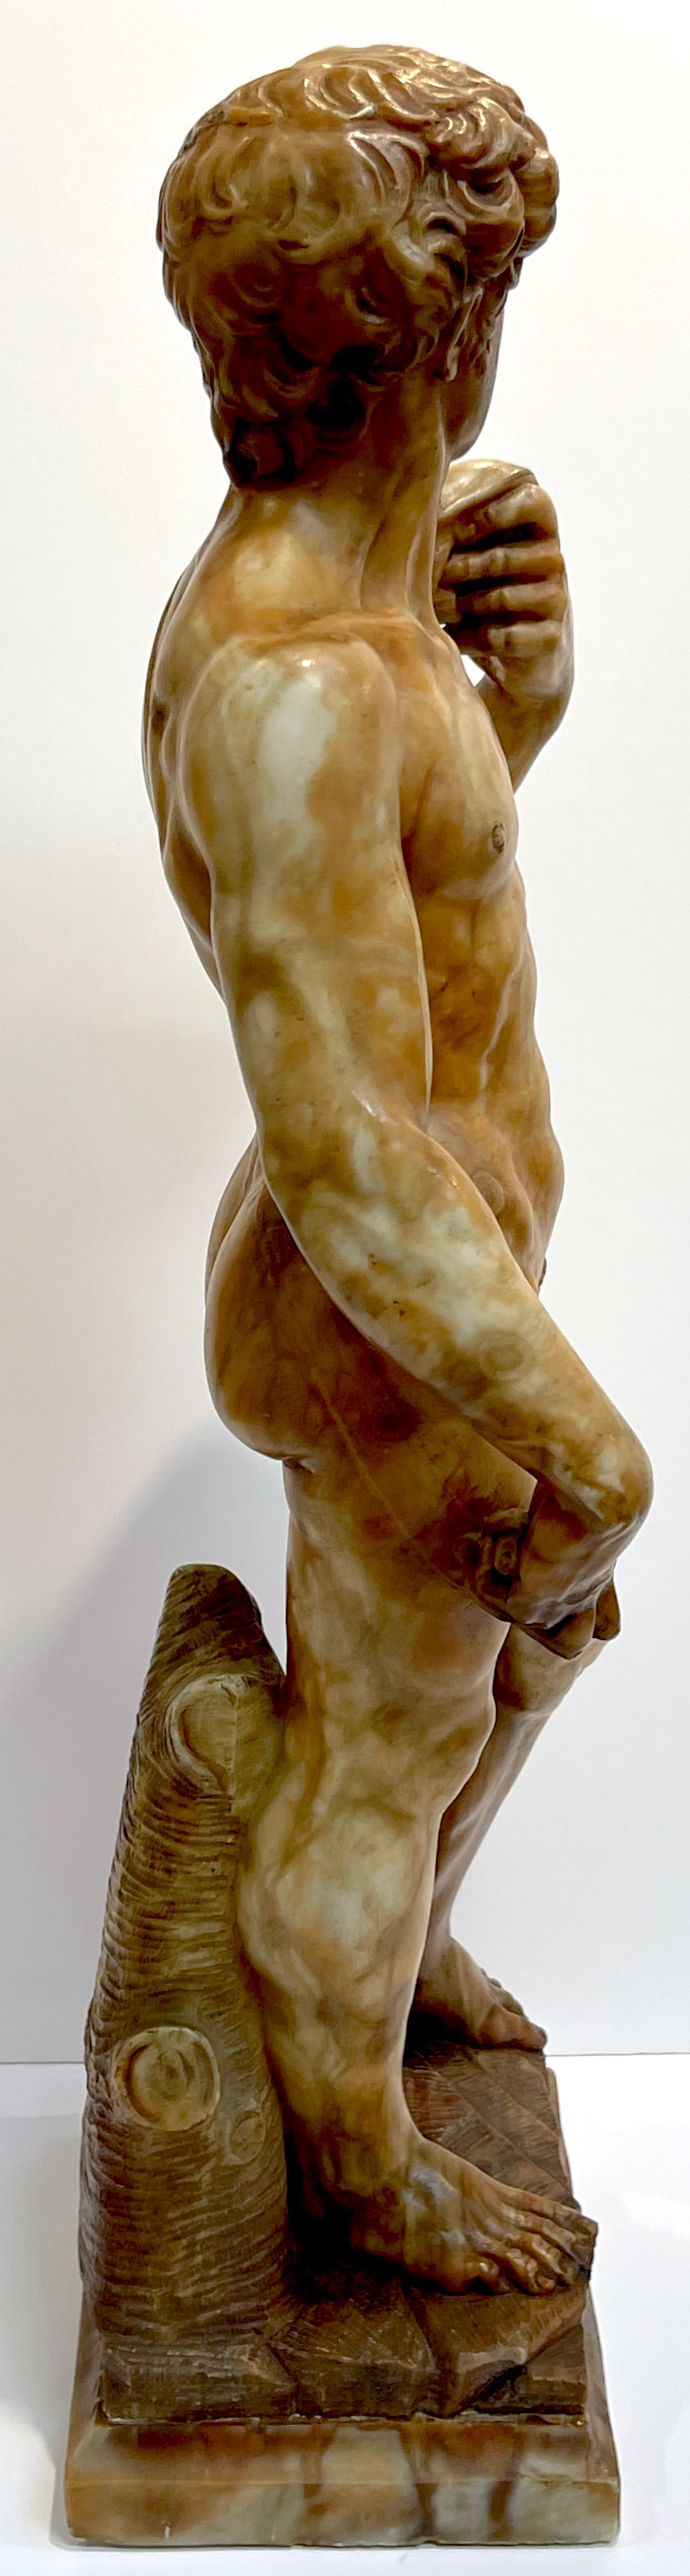 Grand Tour Tortoiseshell Quartz/Mable Sculpture of Michelangelo's David For Sale 4